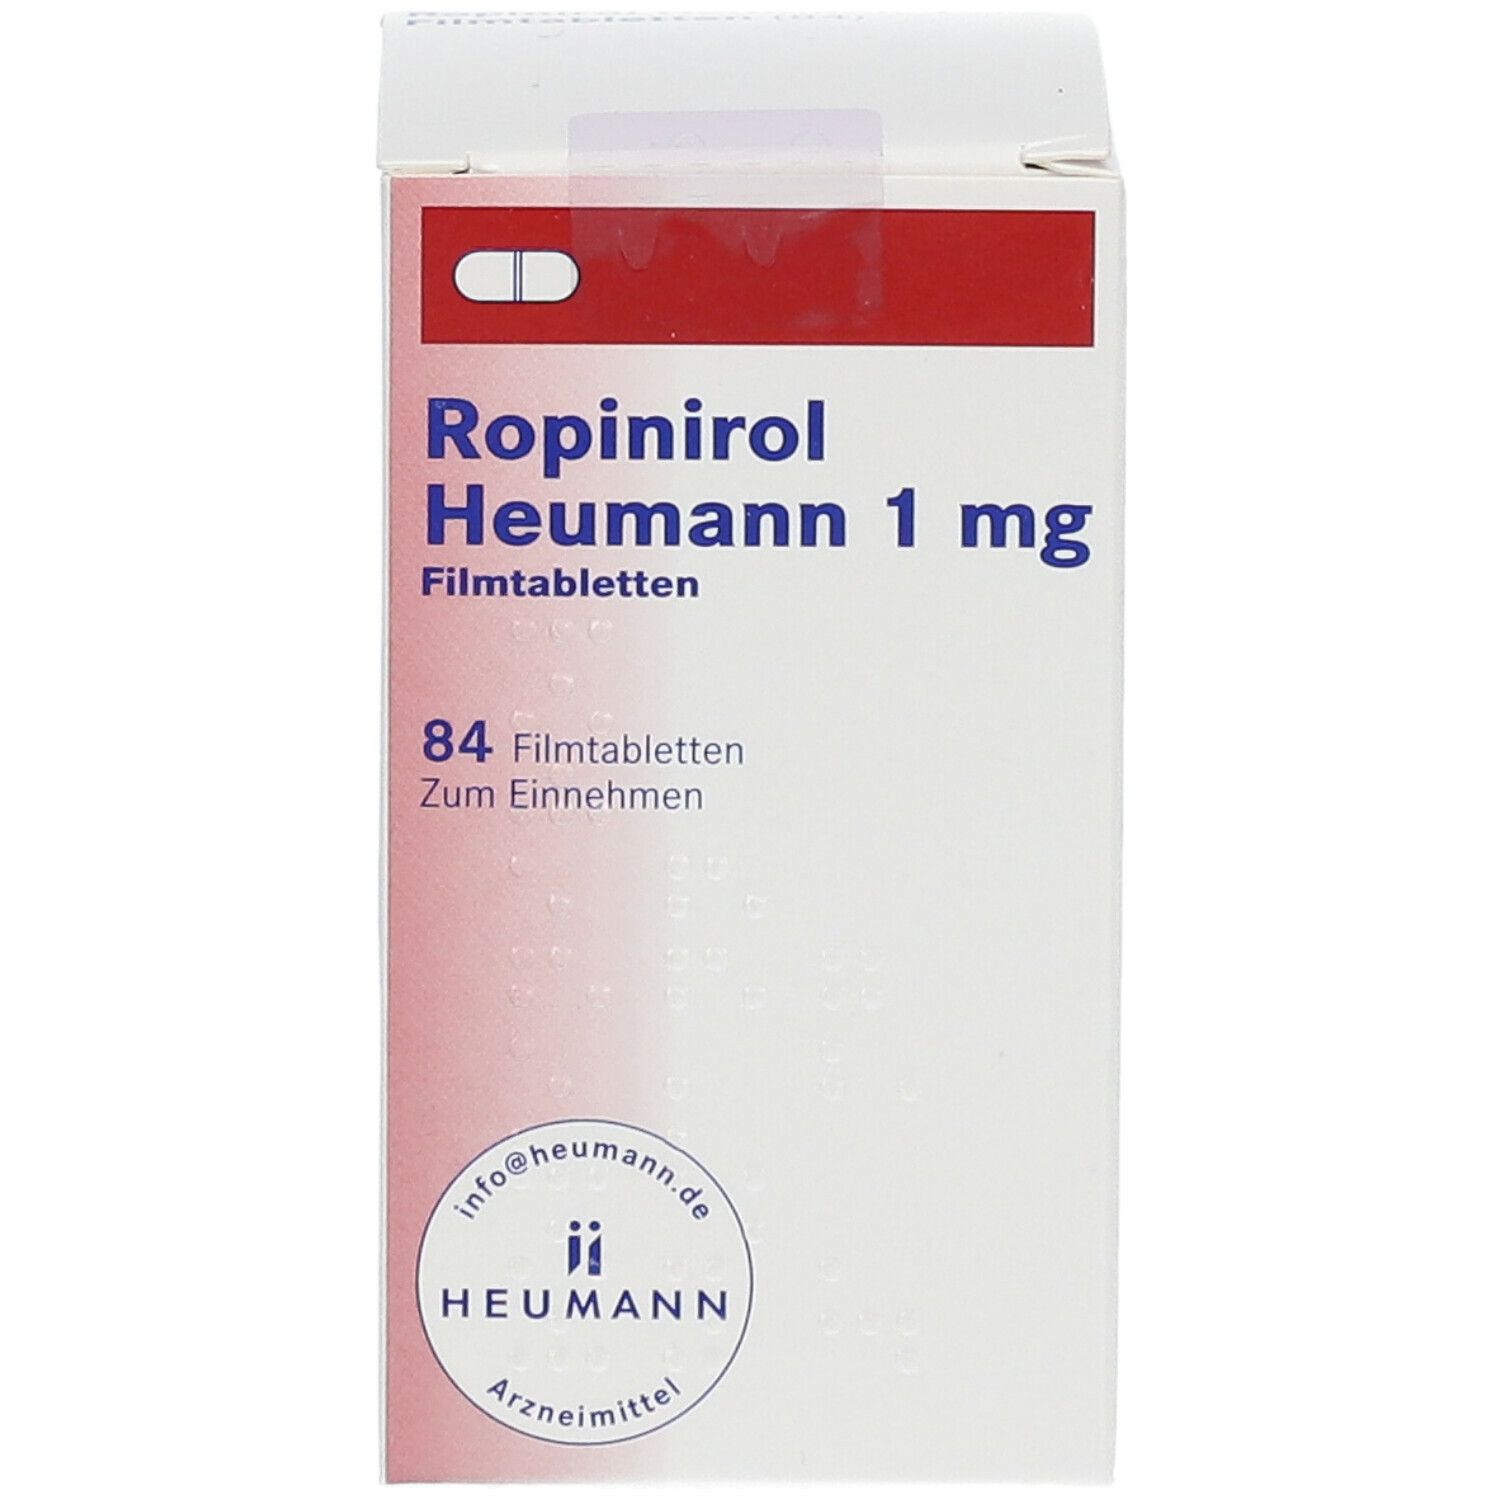 Ropinirol Heumann 1 mg